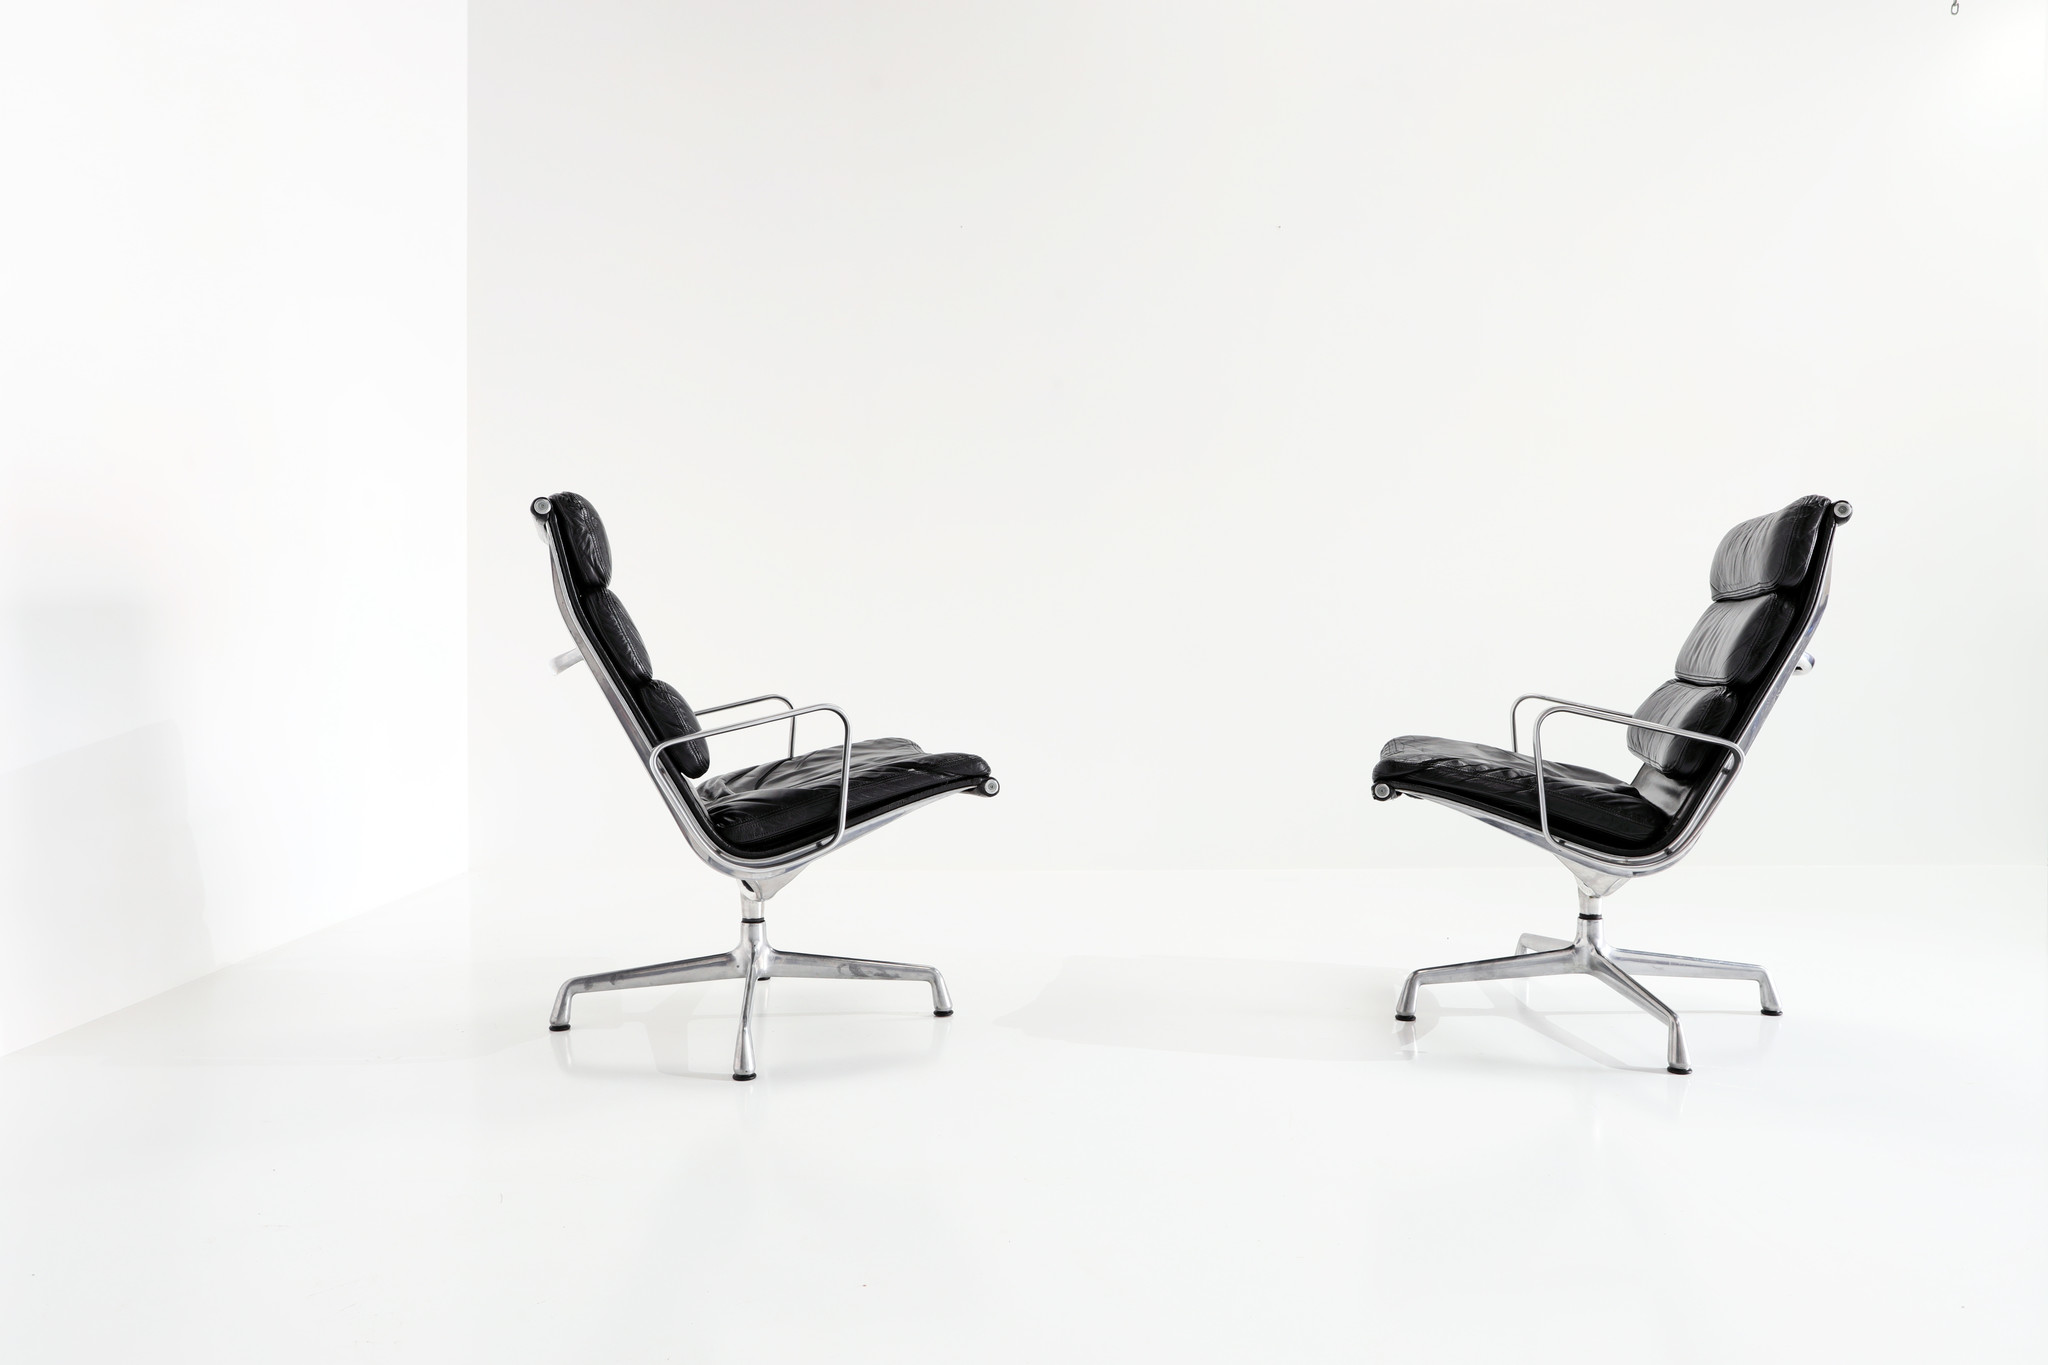 Lounge soft pad chairs ontworpen door Charles Eames voor Herman Miller